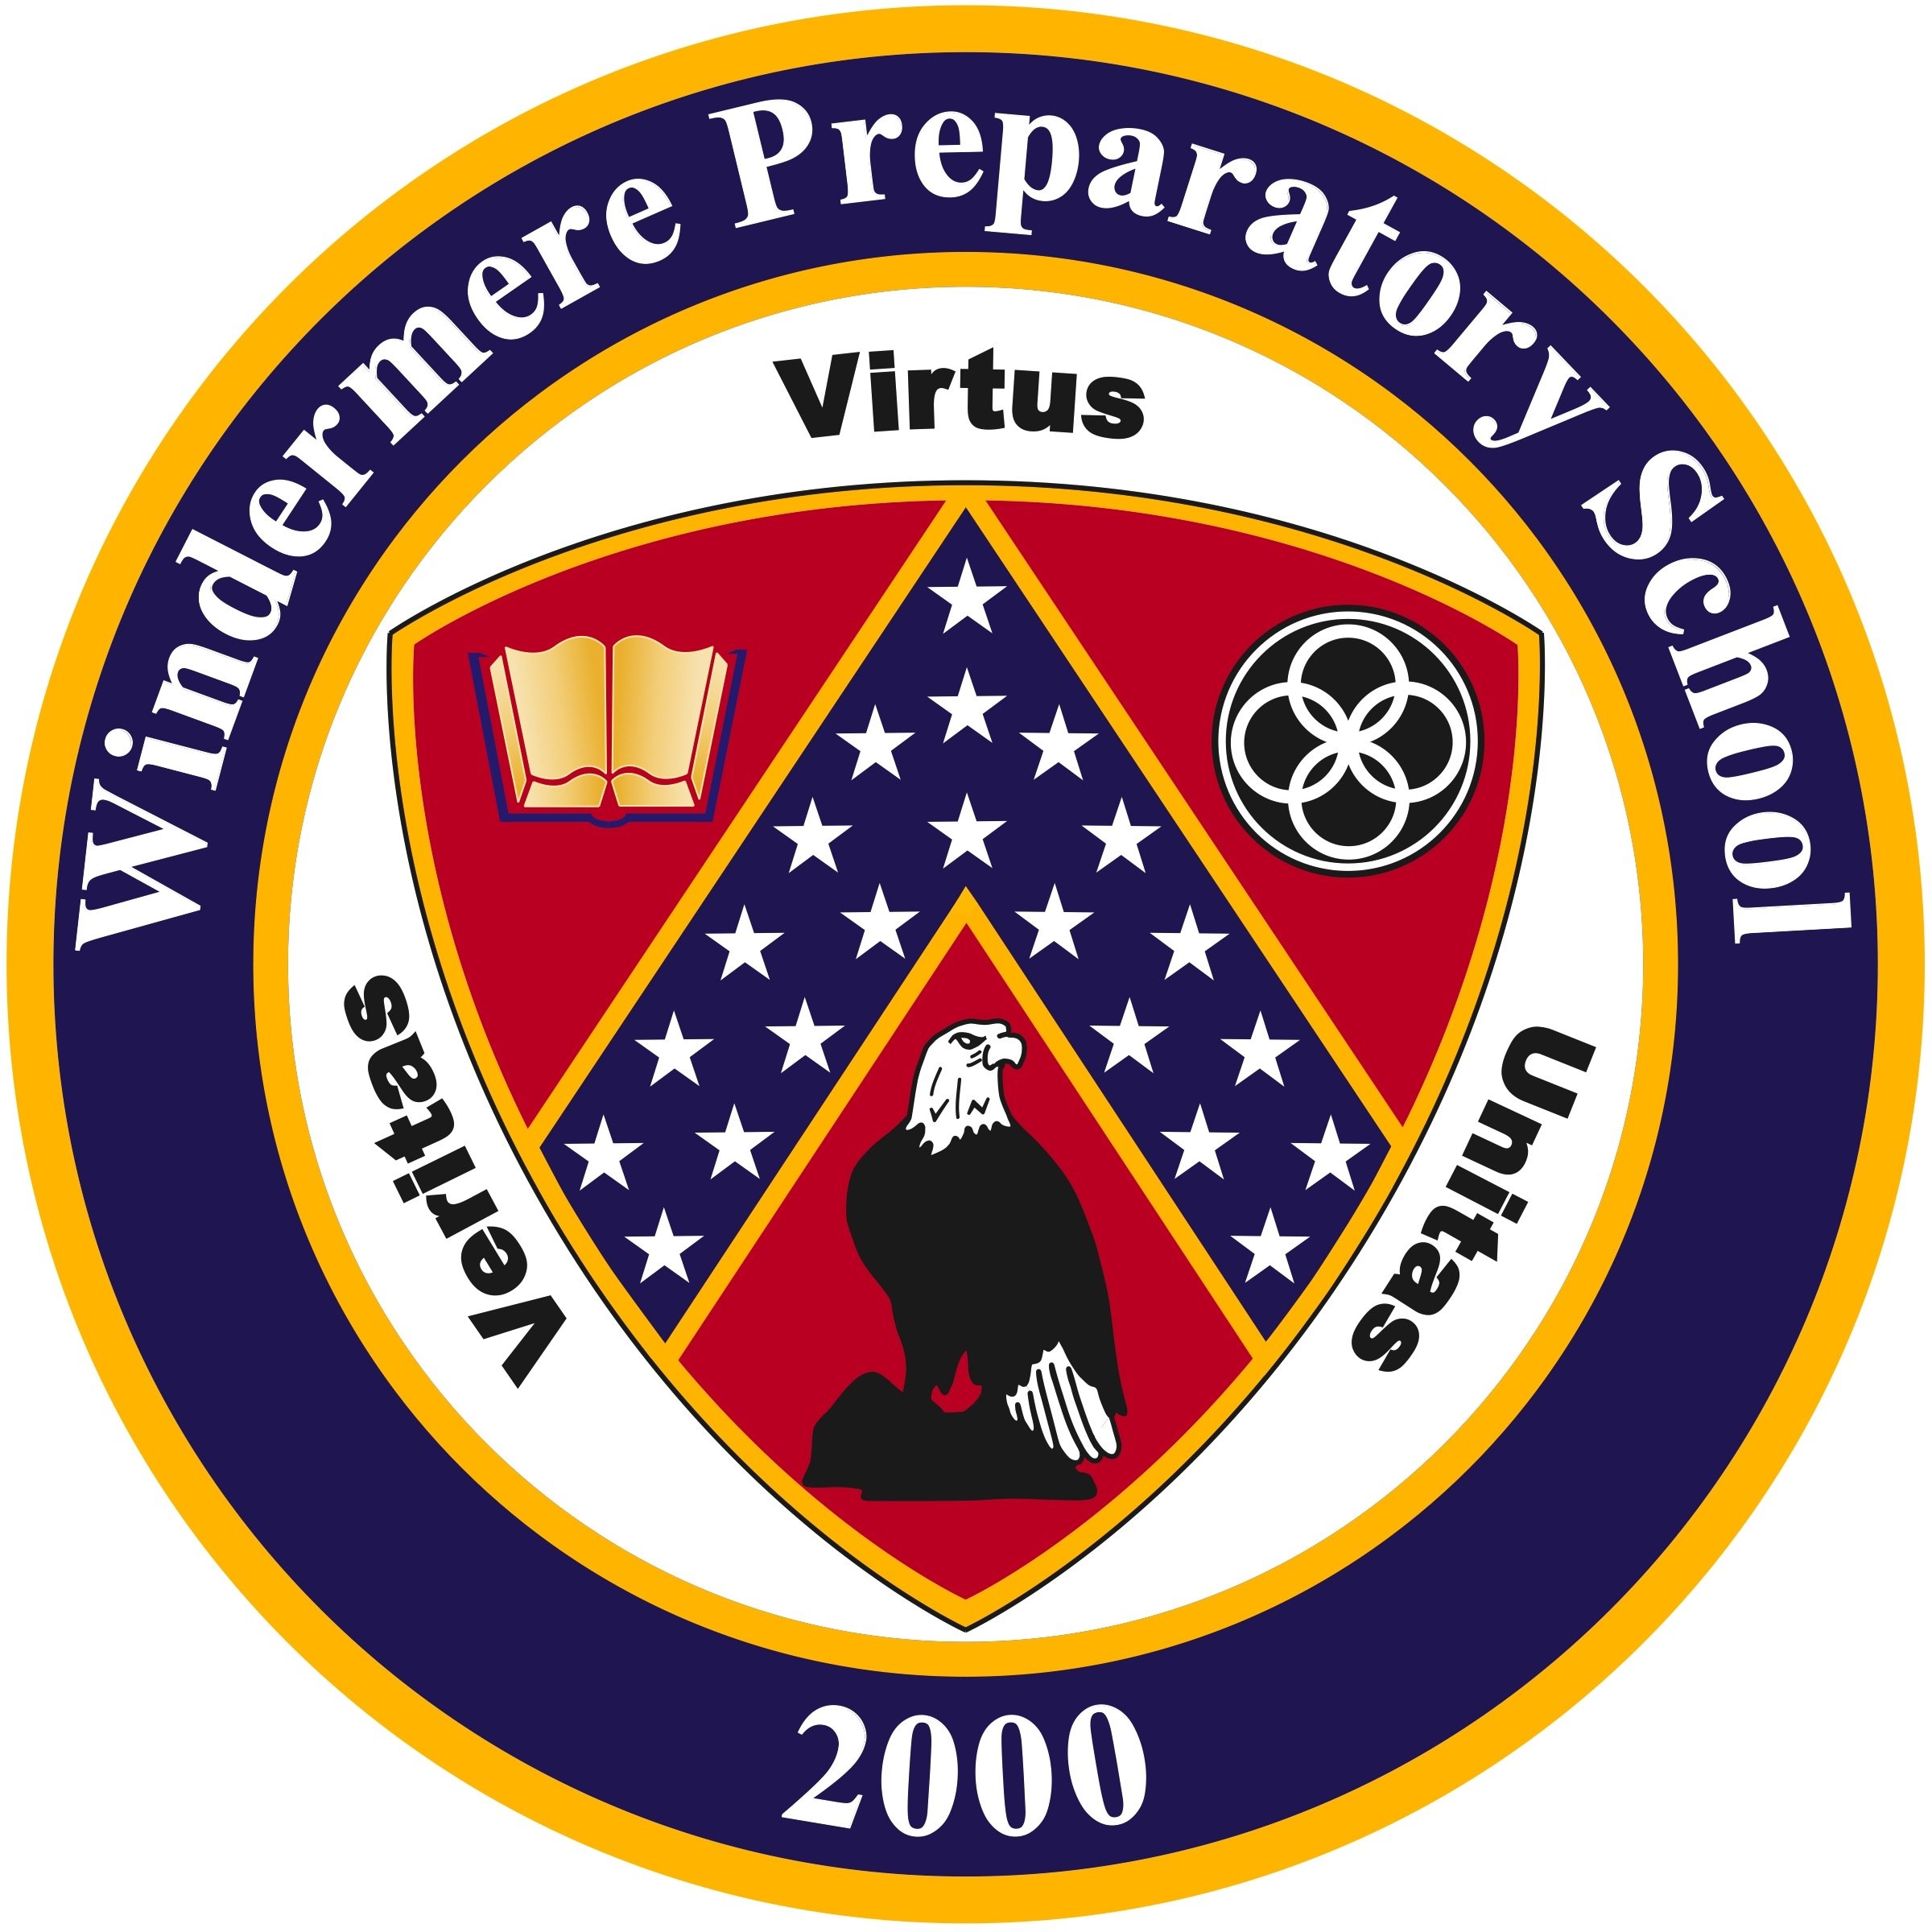 Windermere Preparatory School Школа Уиндермир